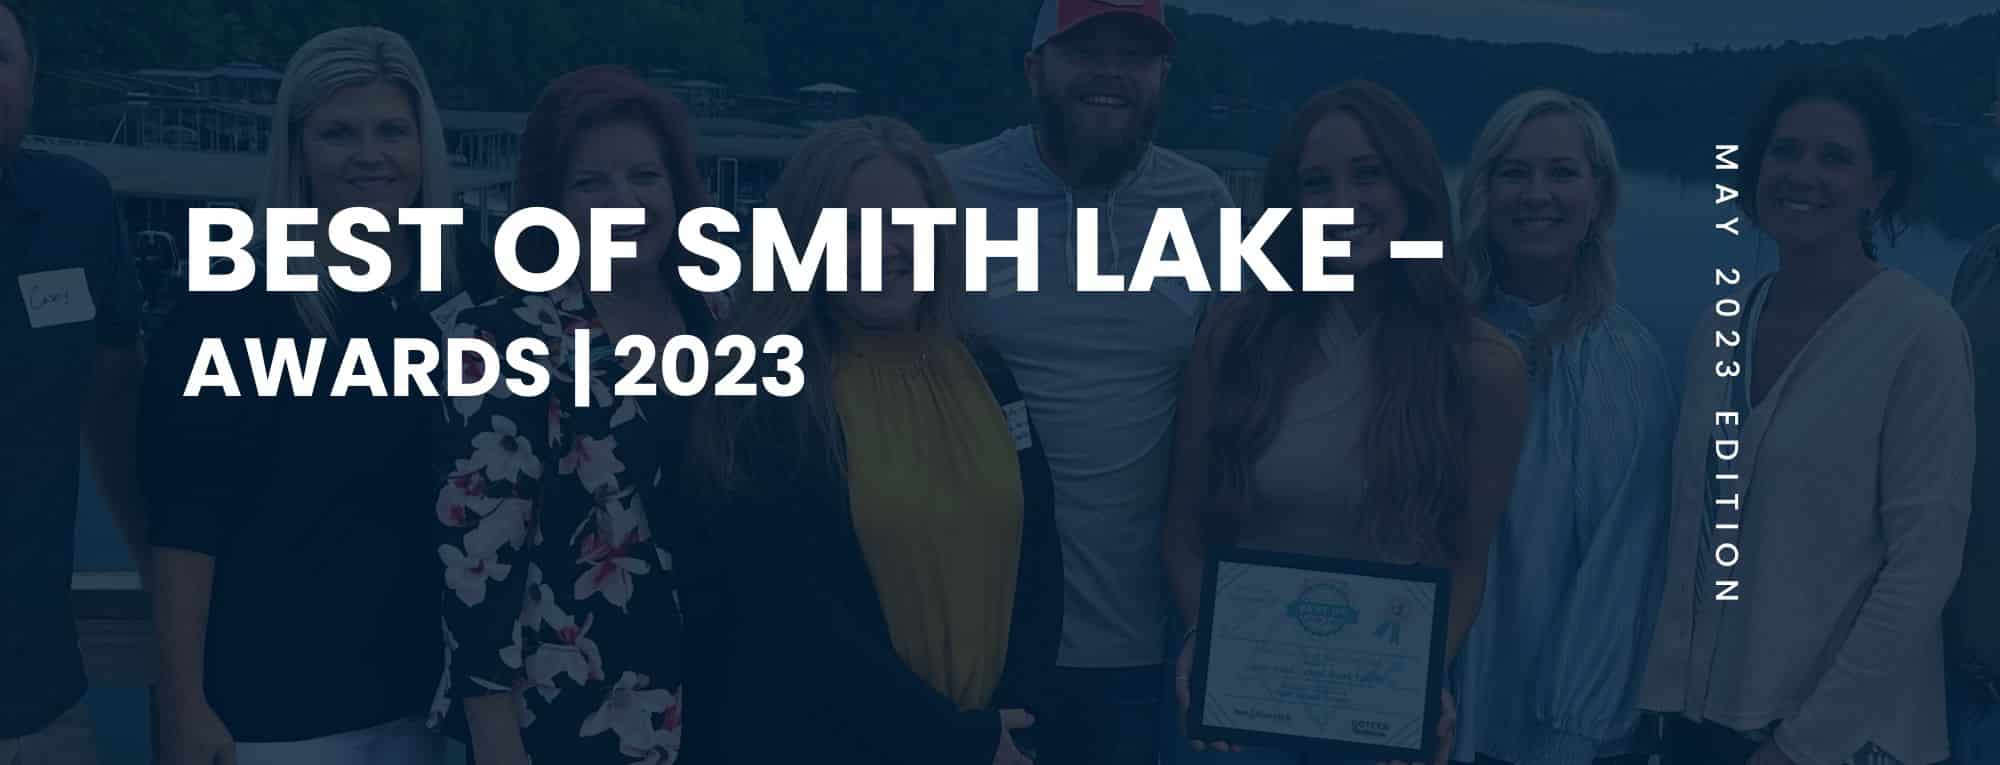 Blog Post Header - Best of Smit Lake 2023